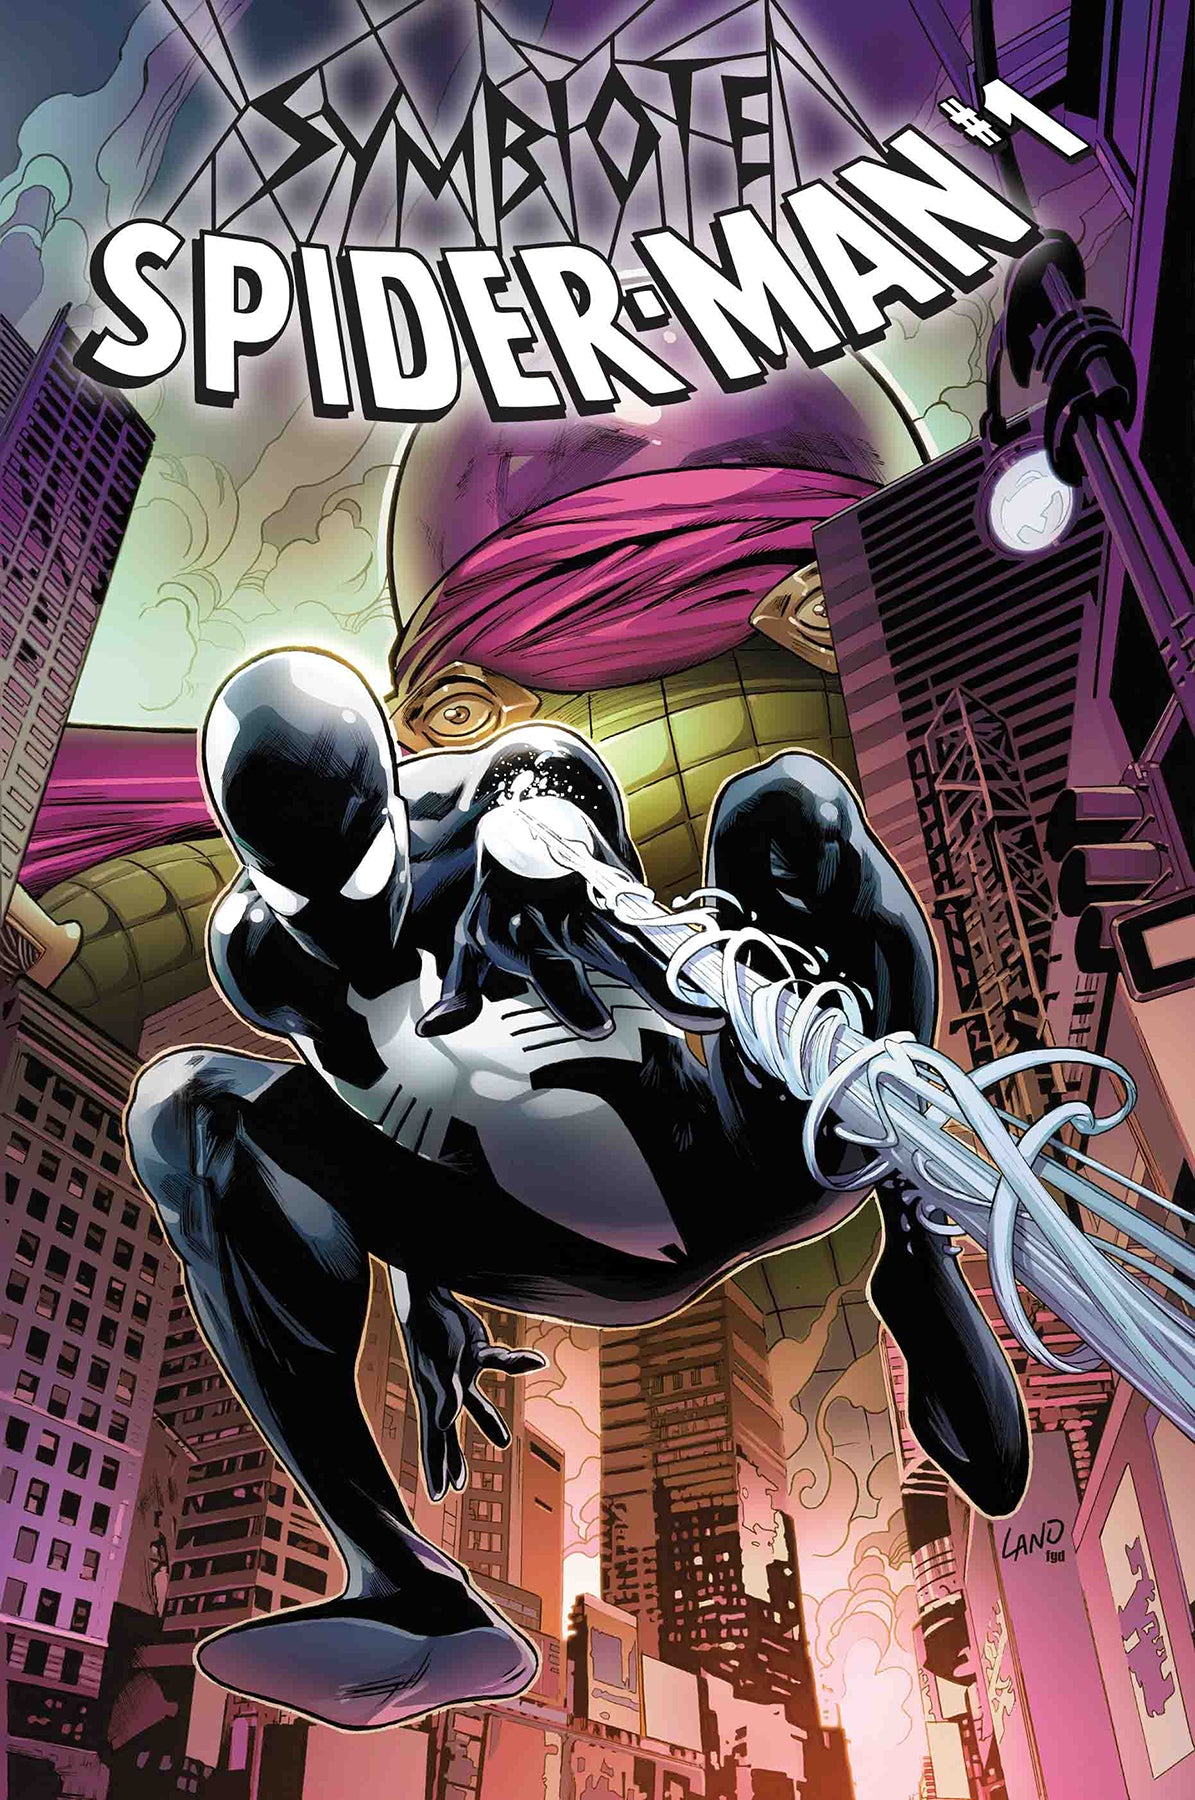 SYMBIOTE SPIDER-MAN #1 | L.A. Mood Comics and Games